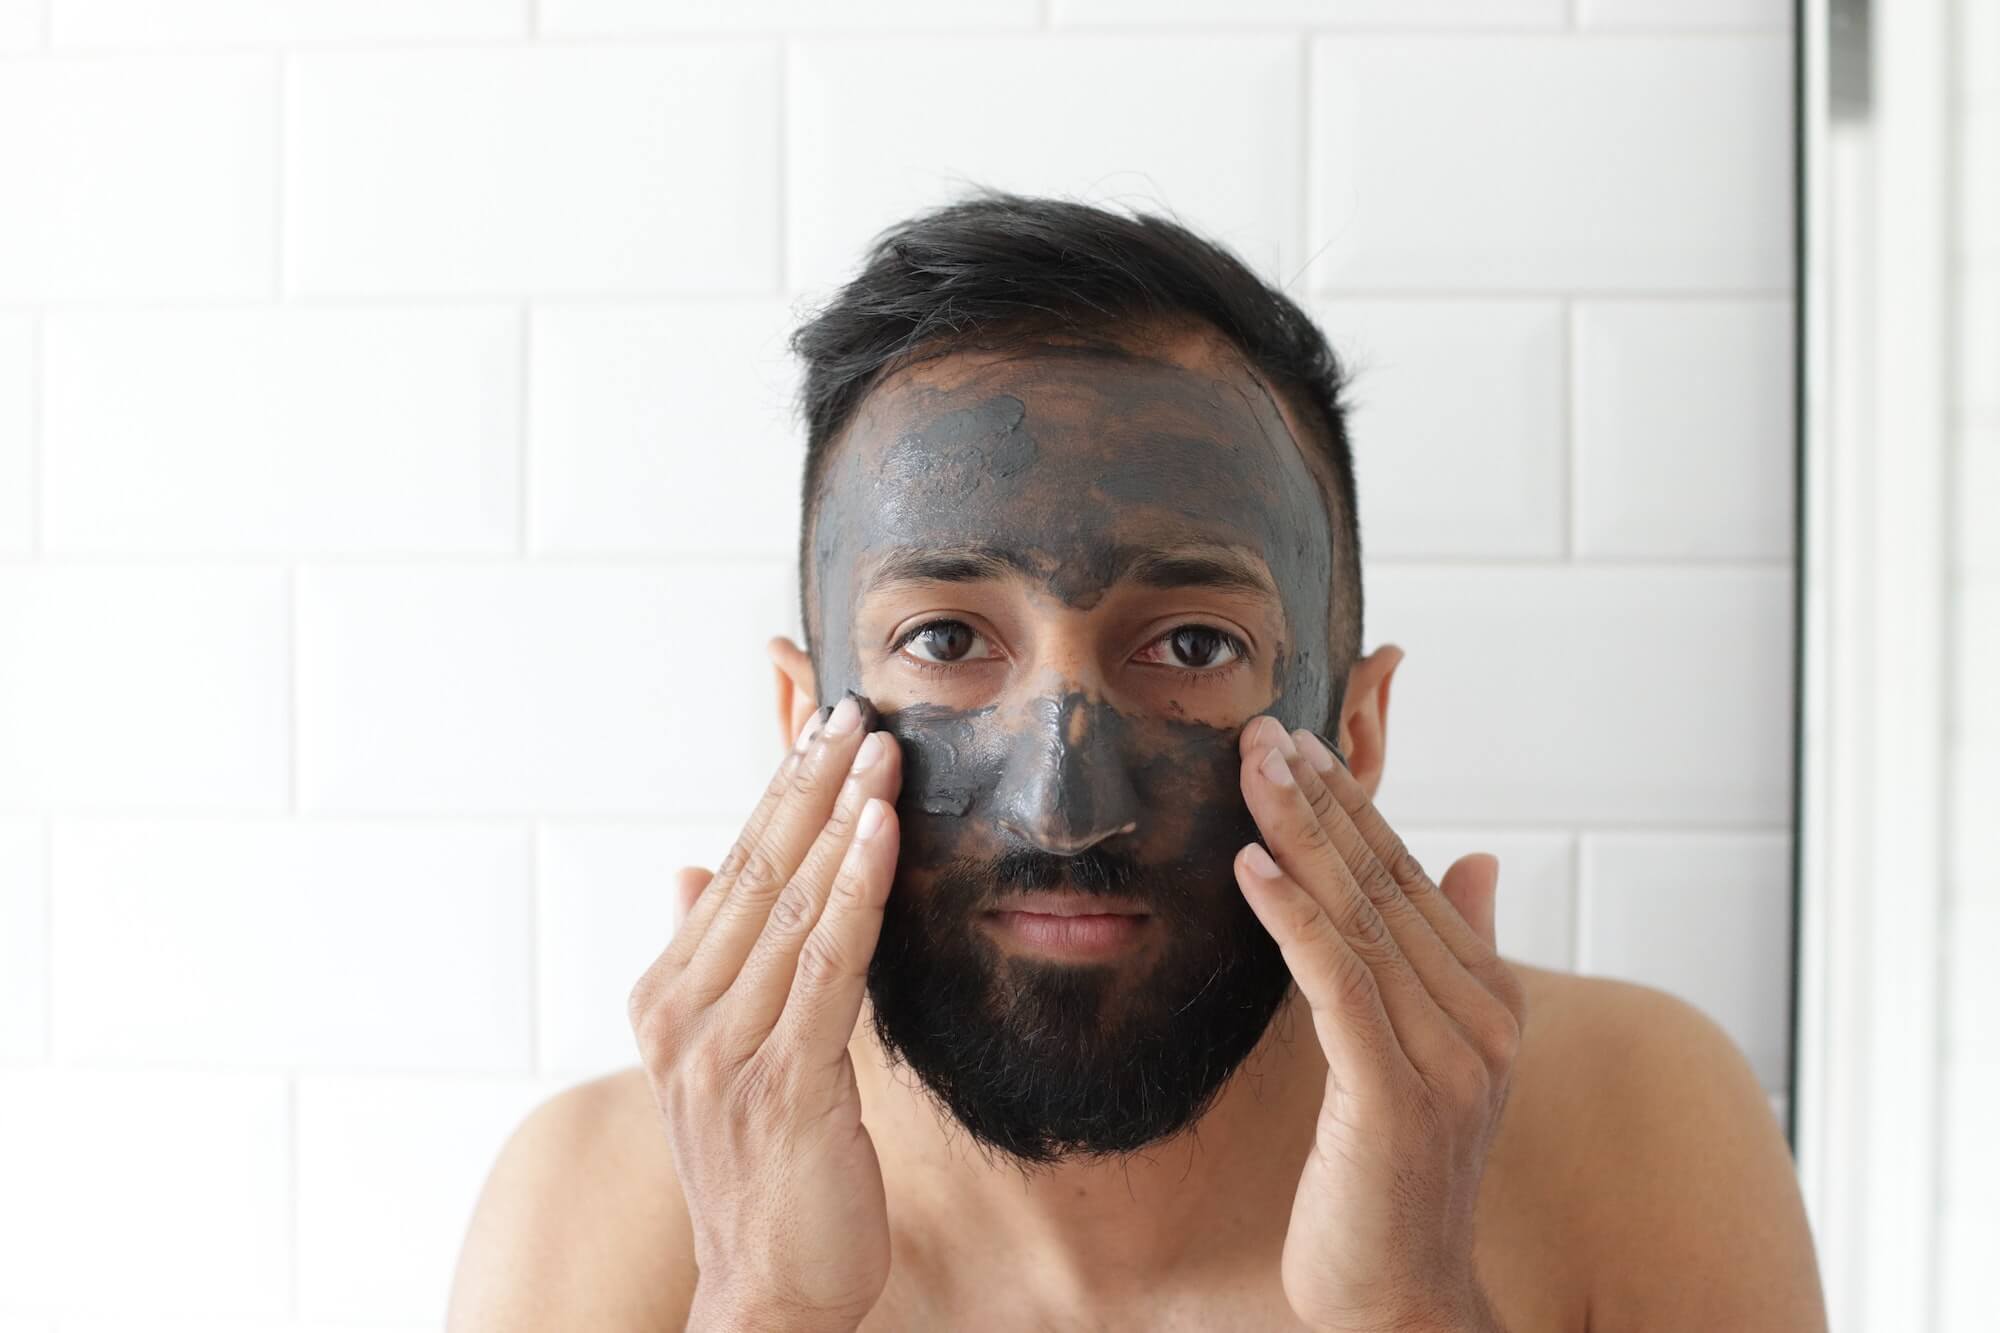 Man applying skin nourishing face mask in bathroom mirror